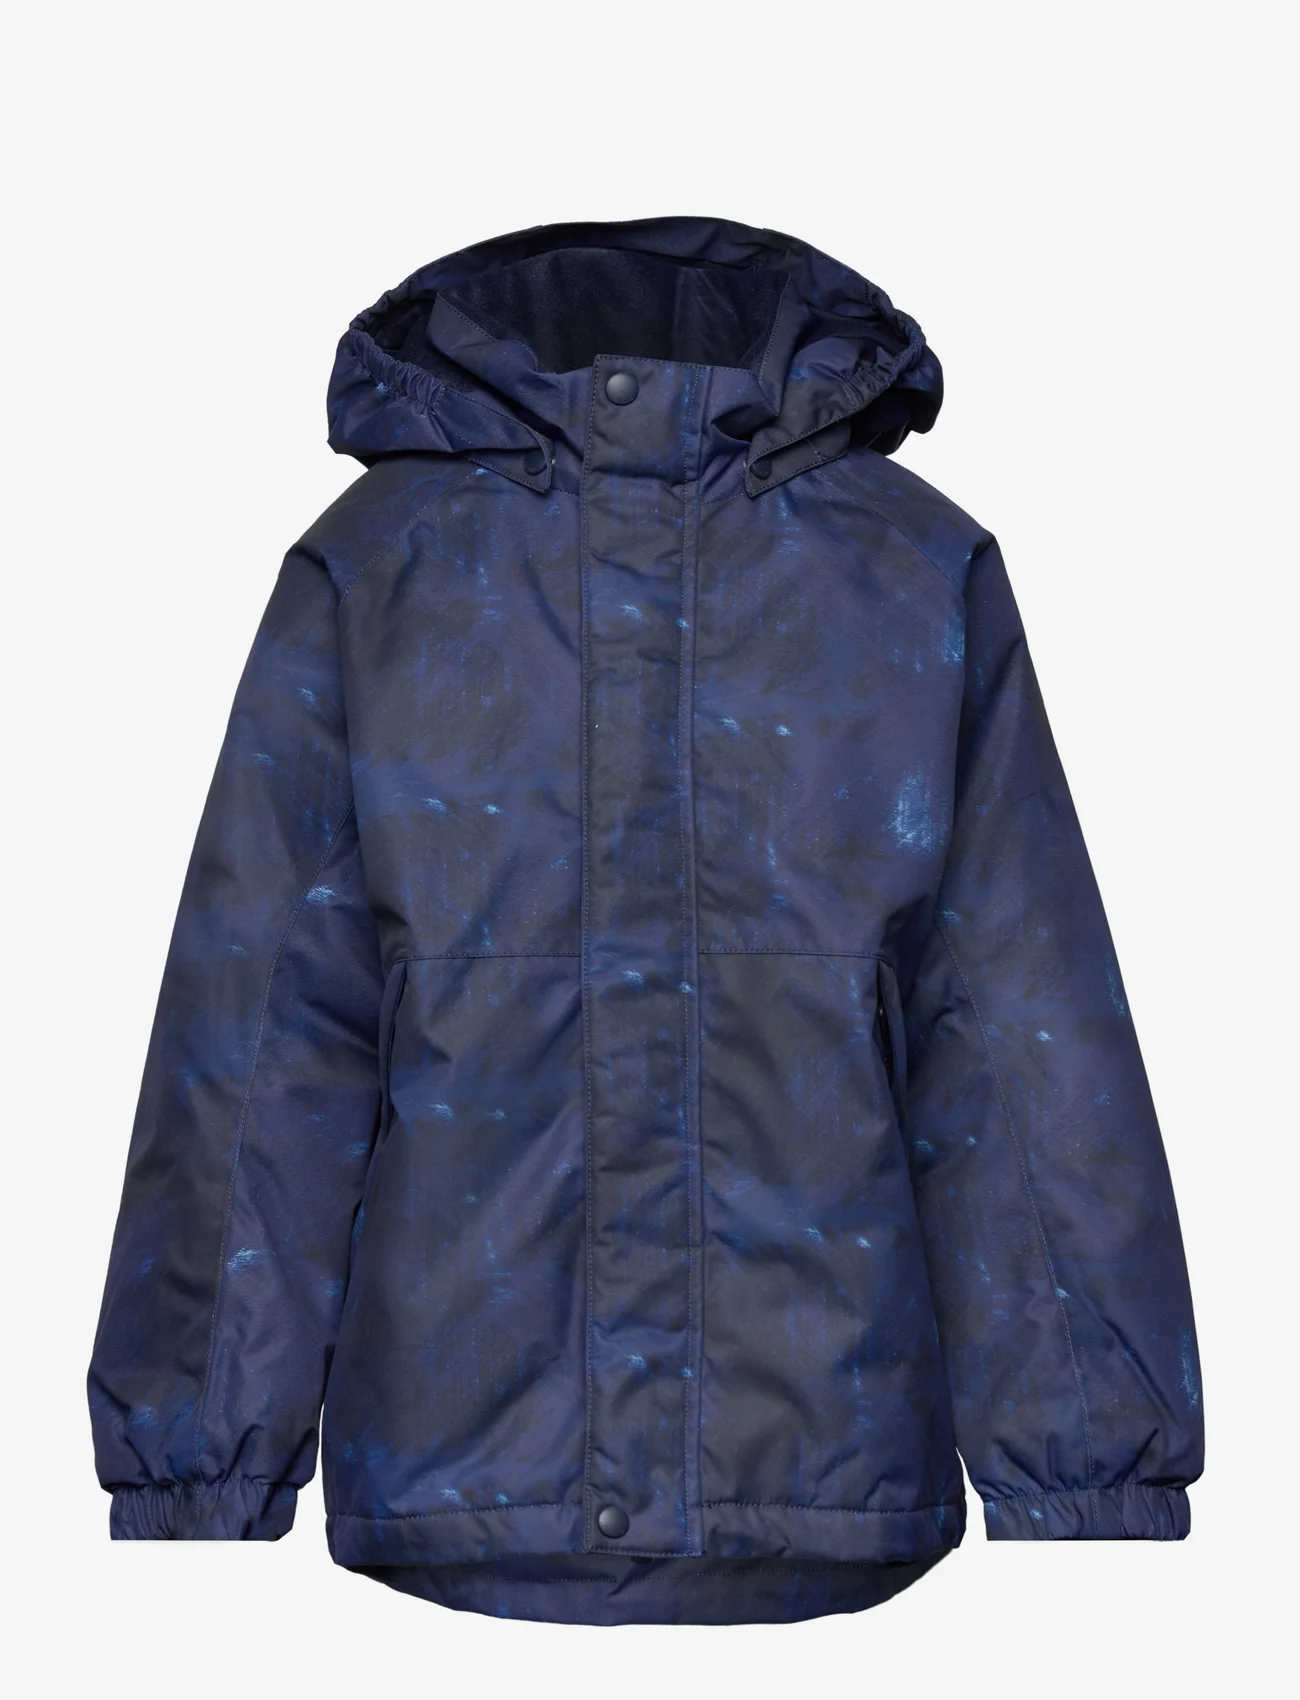 Reima - Reimatec winter jacket, Maalo - vinterjakker - navy - 0